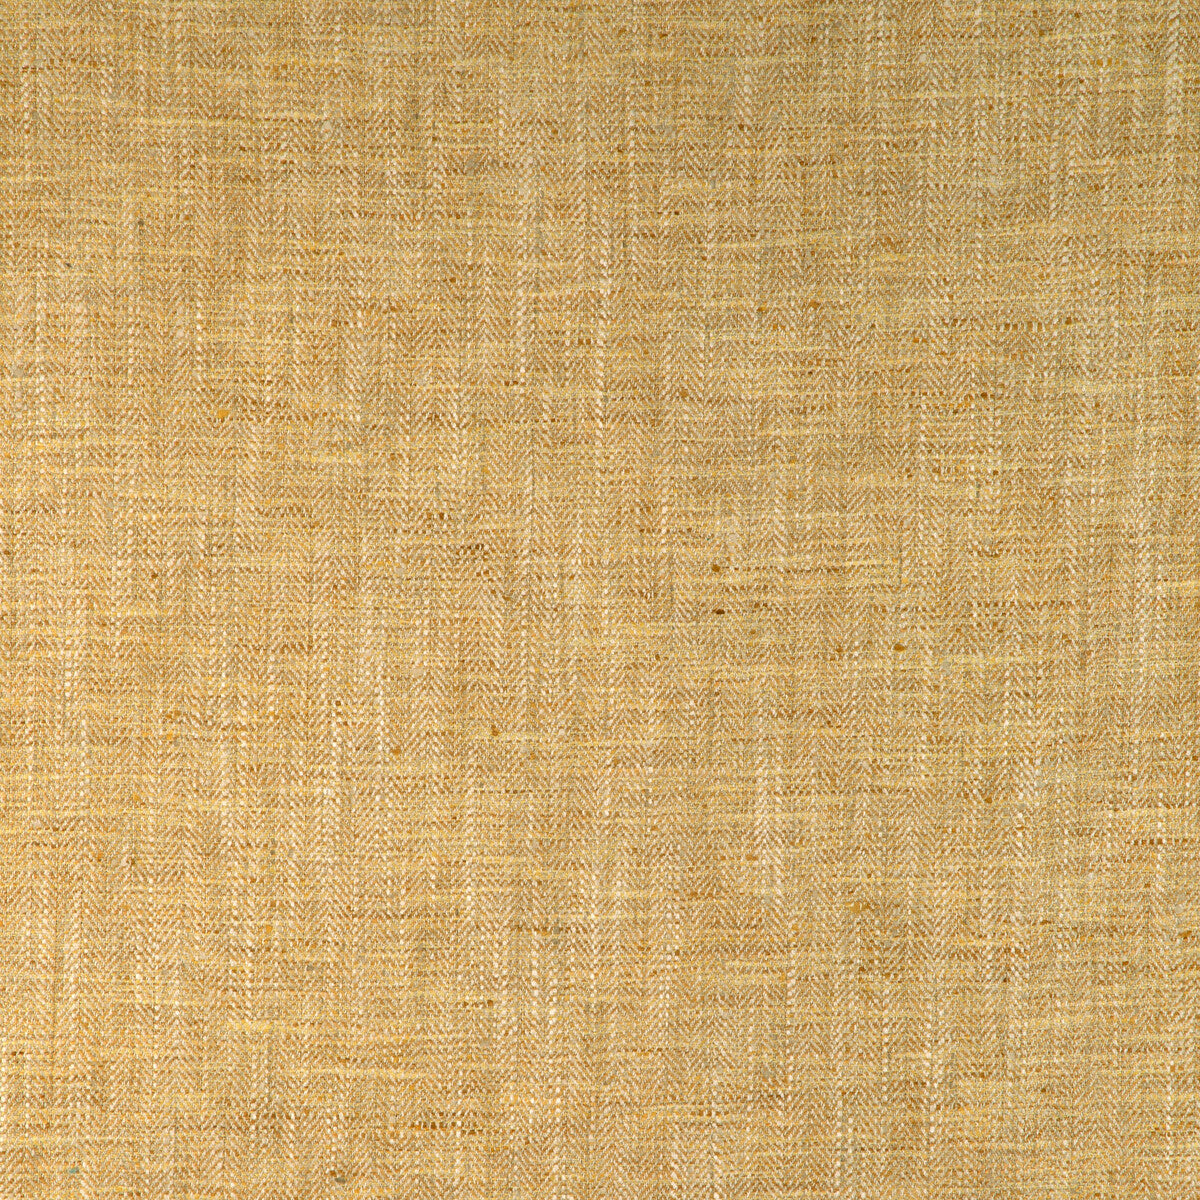 Kravet Smart fabric in 34088-4 color - pattern 34088.4.0 - by Kravet Smart